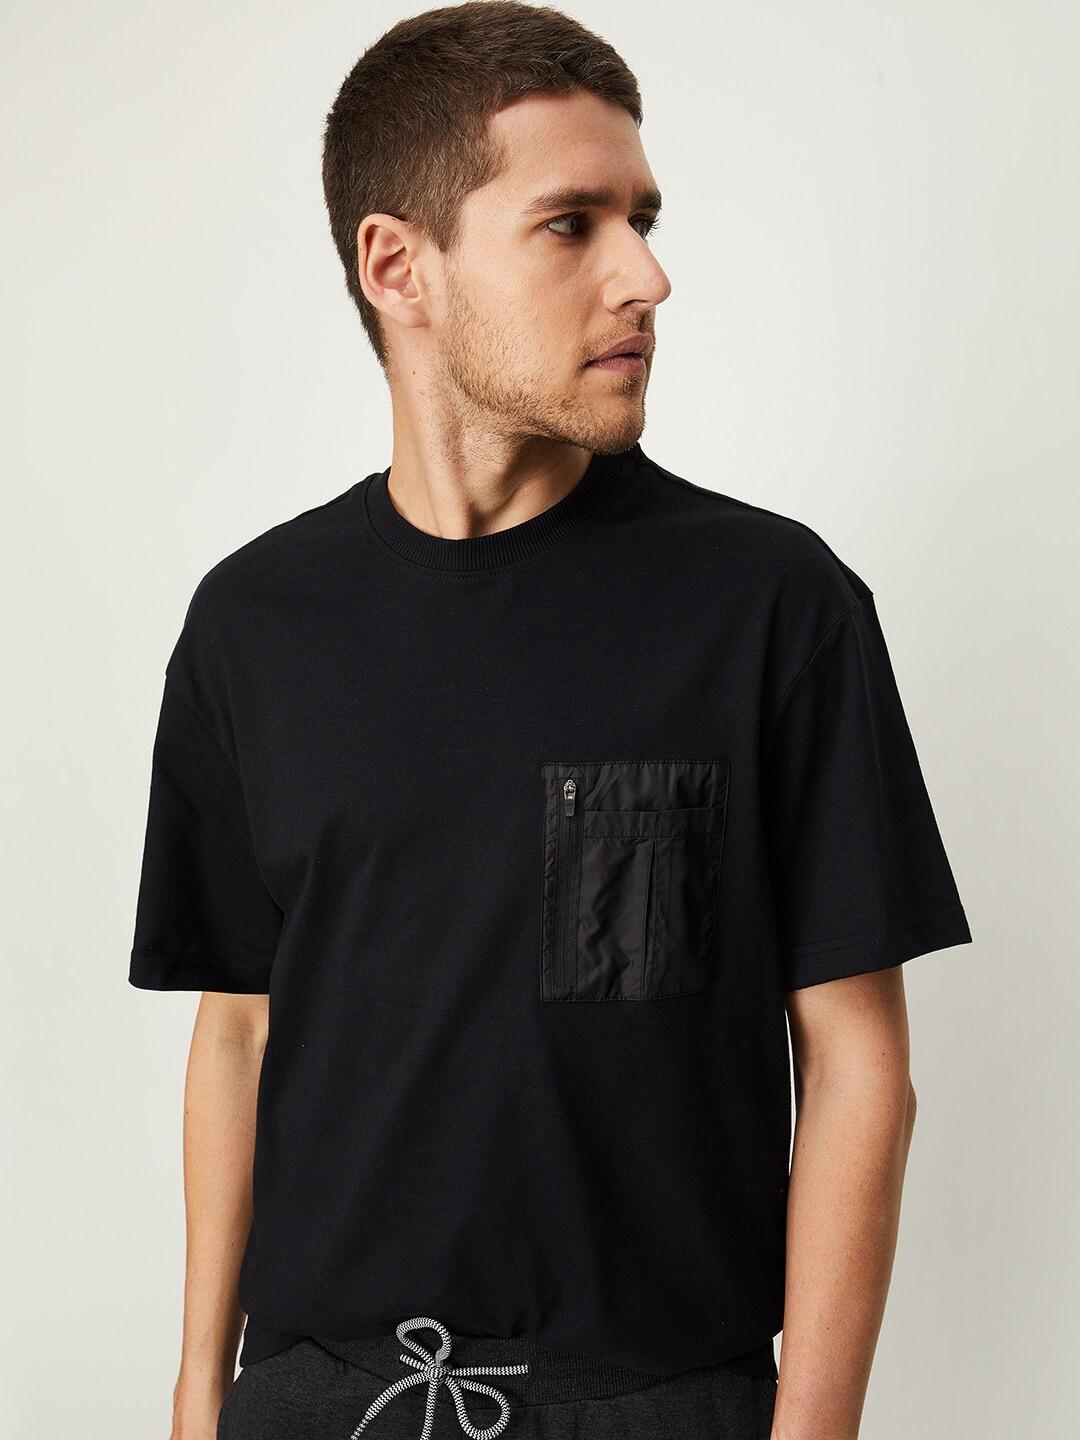 max men black typography round neck pockets oversized t-shirt